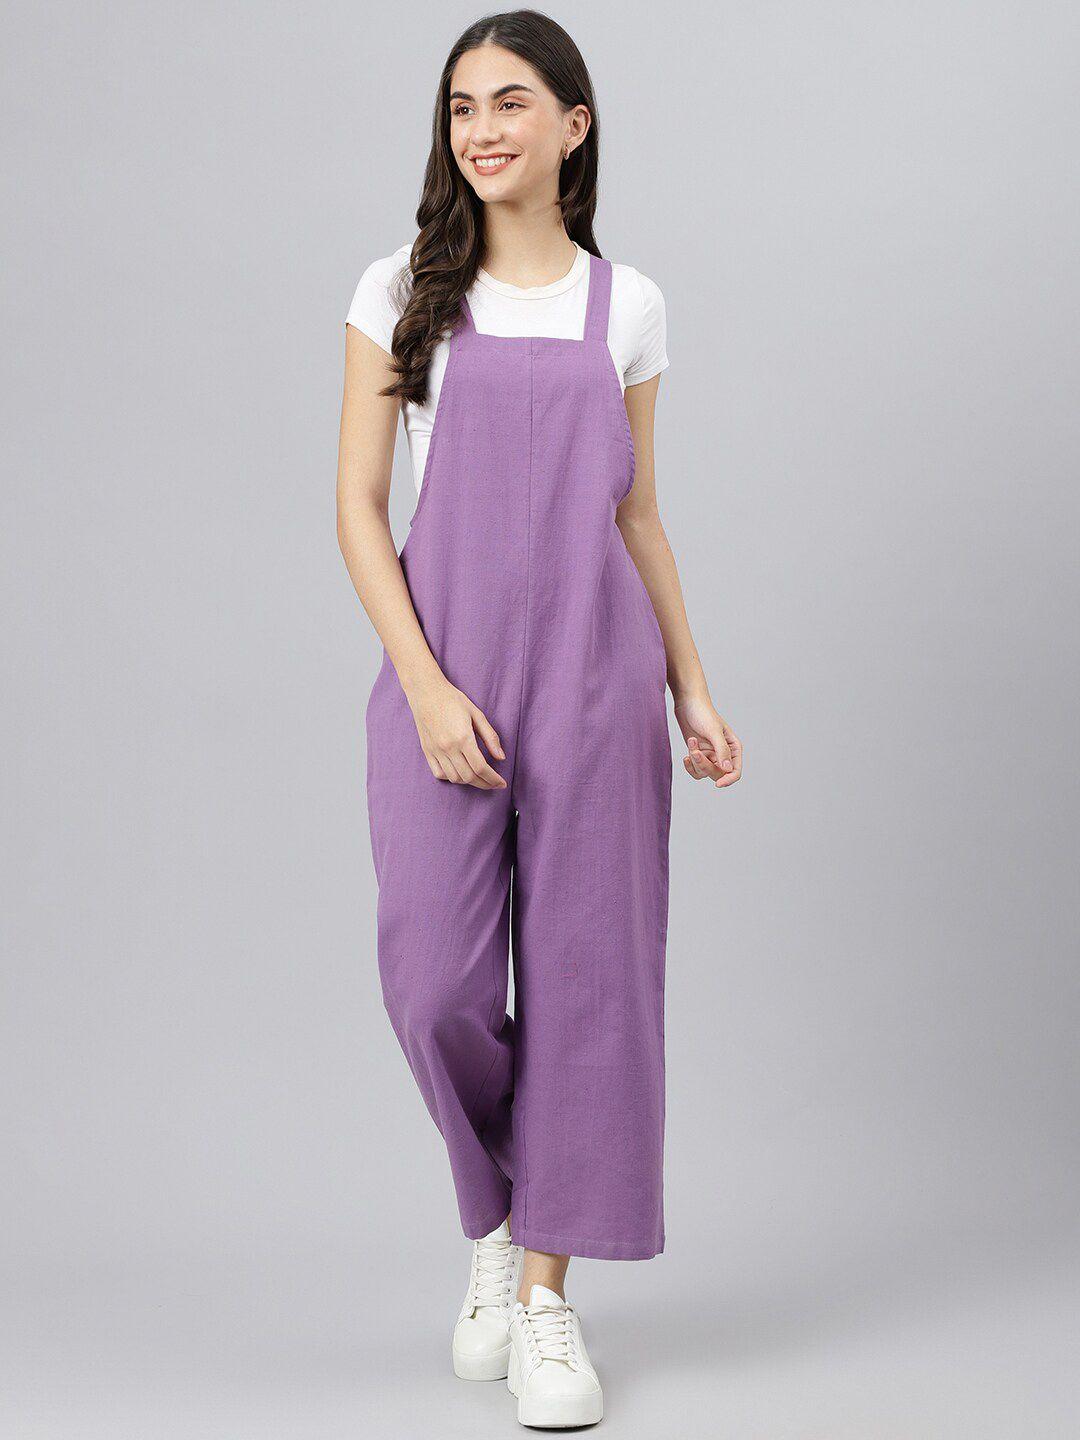 deebaco-lavender-&-white-culotte-jumpsuit